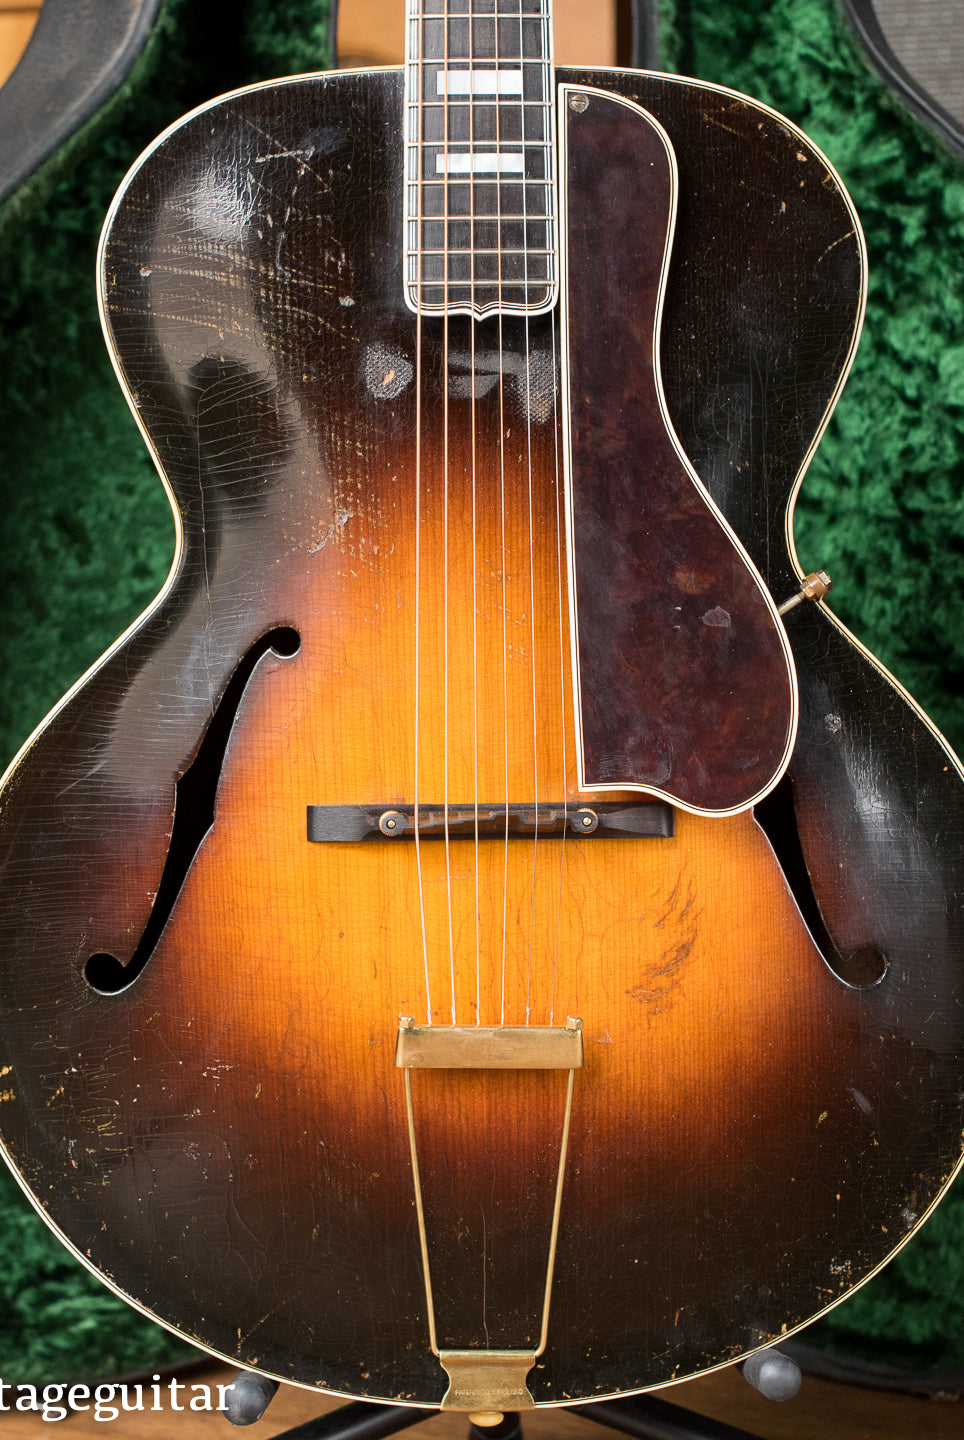 Vintage 1931 Gibson L-5 guitar